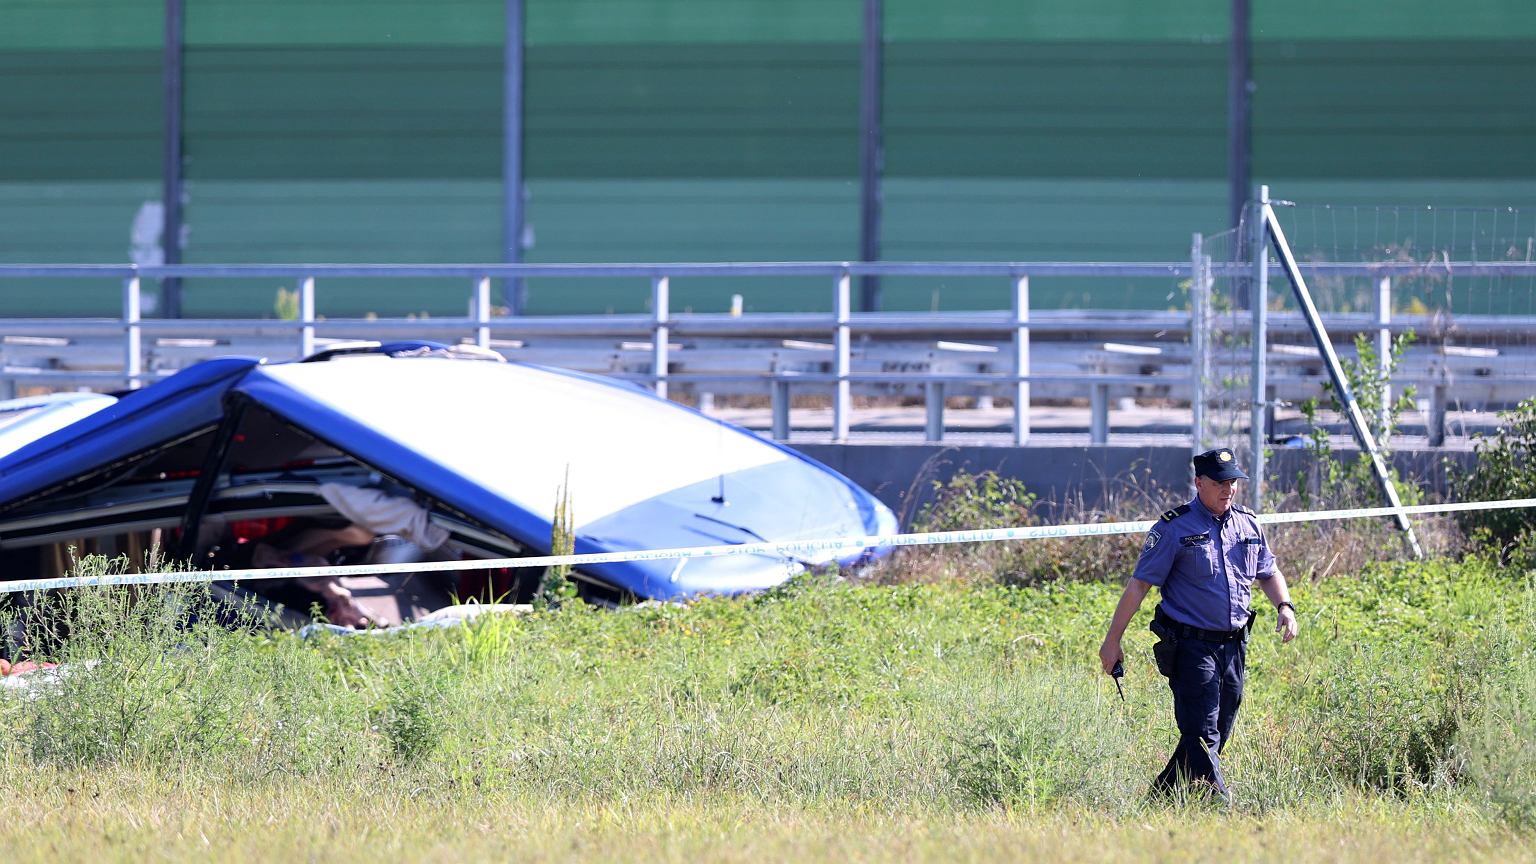 Polish coach accident.  Croatian media: Tachograph destroyed |  world News